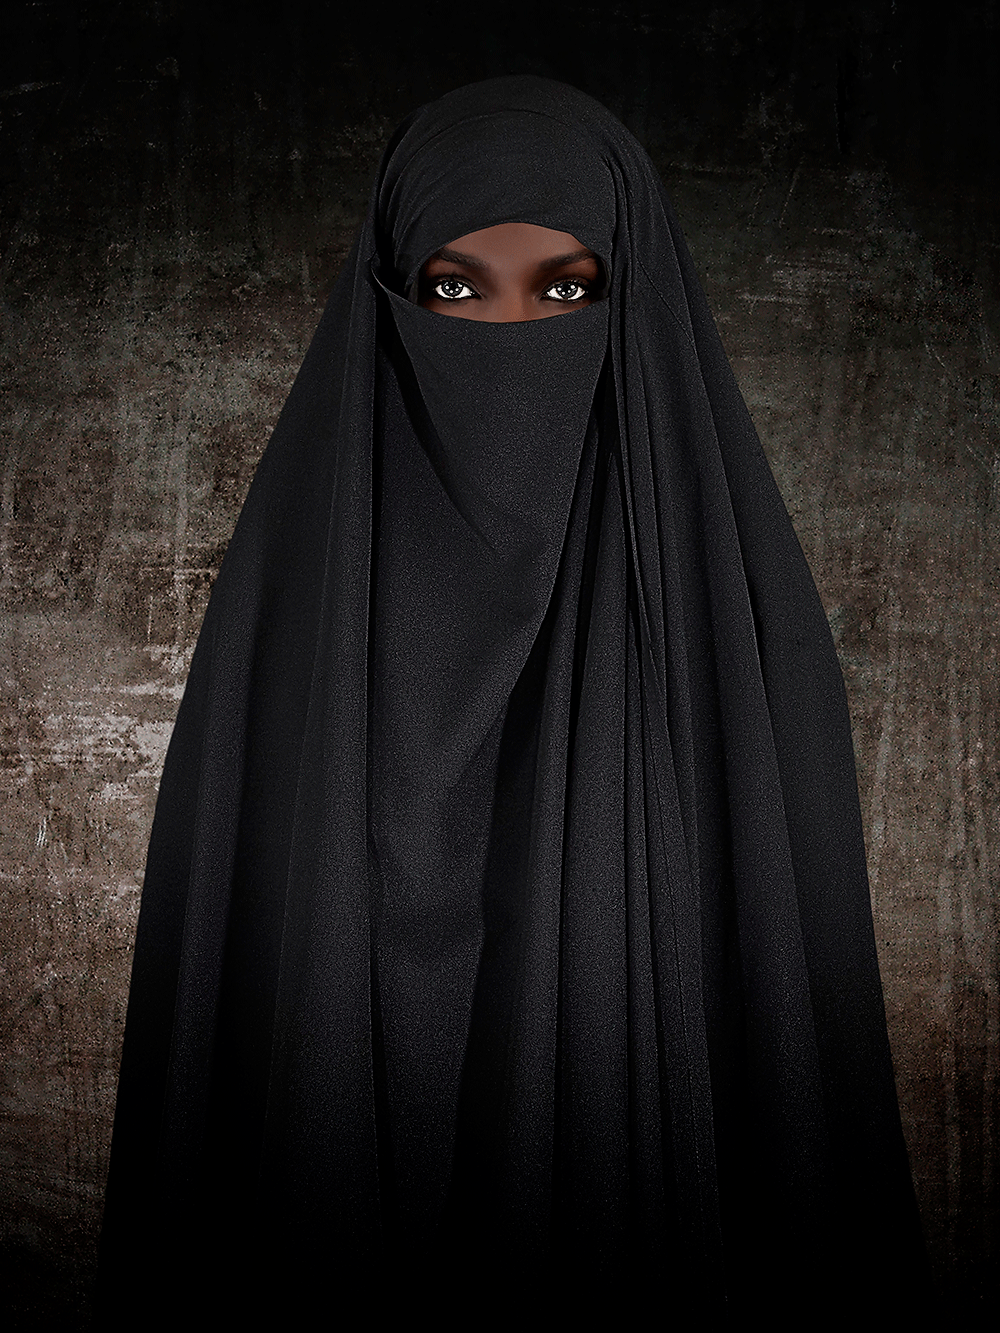 burqa hanna lenticular serie cecile plaisance clementine de forton gallery